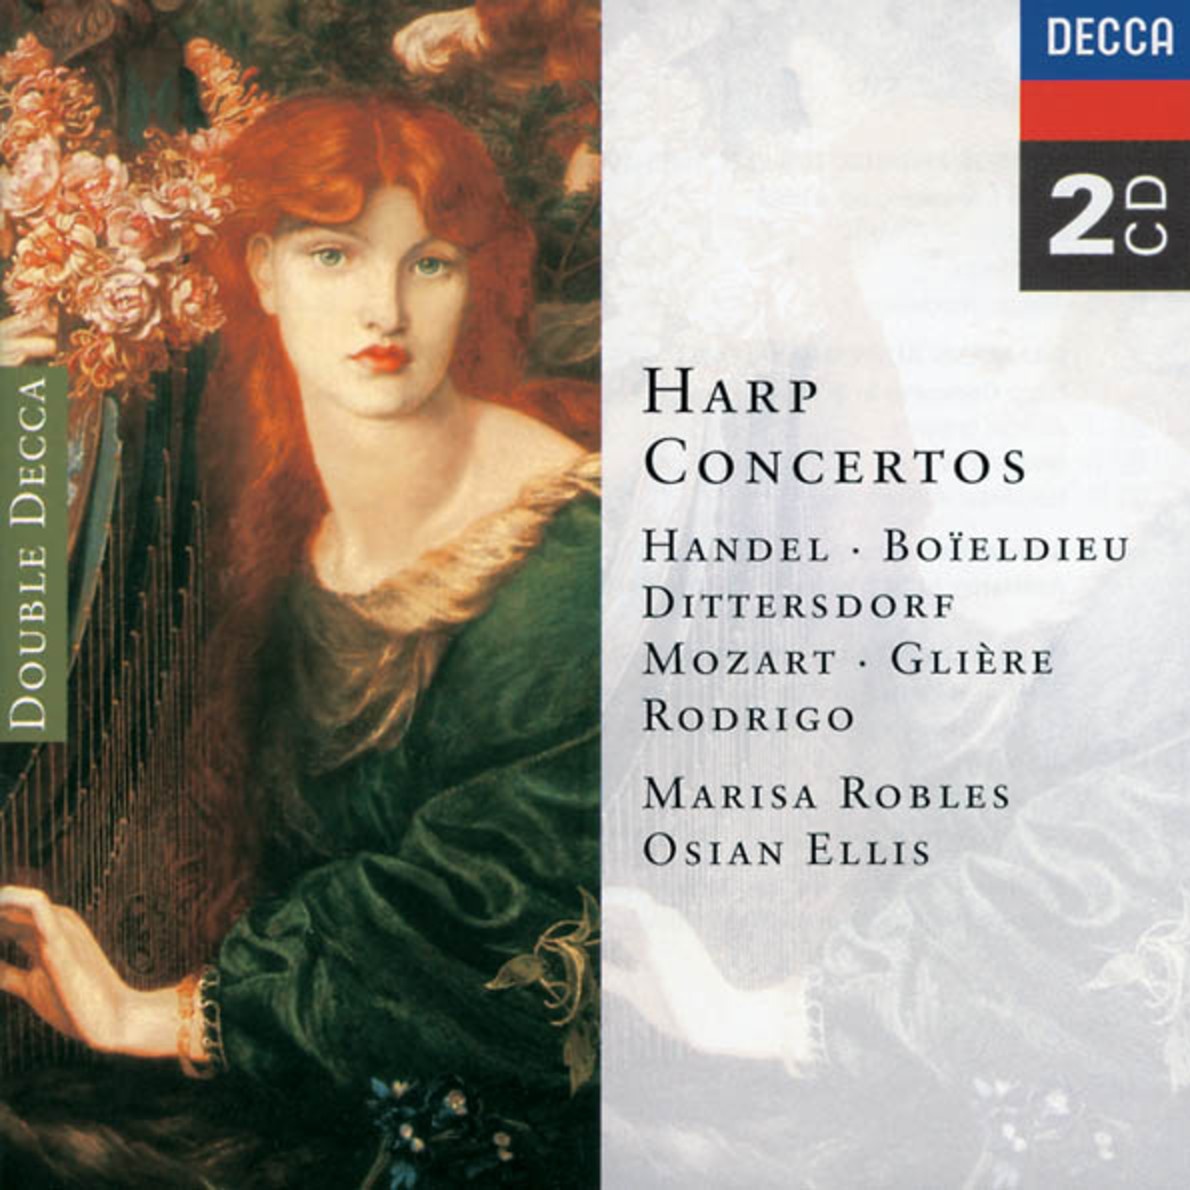 Harp Concerto in B flat, Op.4, No.6, HWV 294:3. Allegro moderato